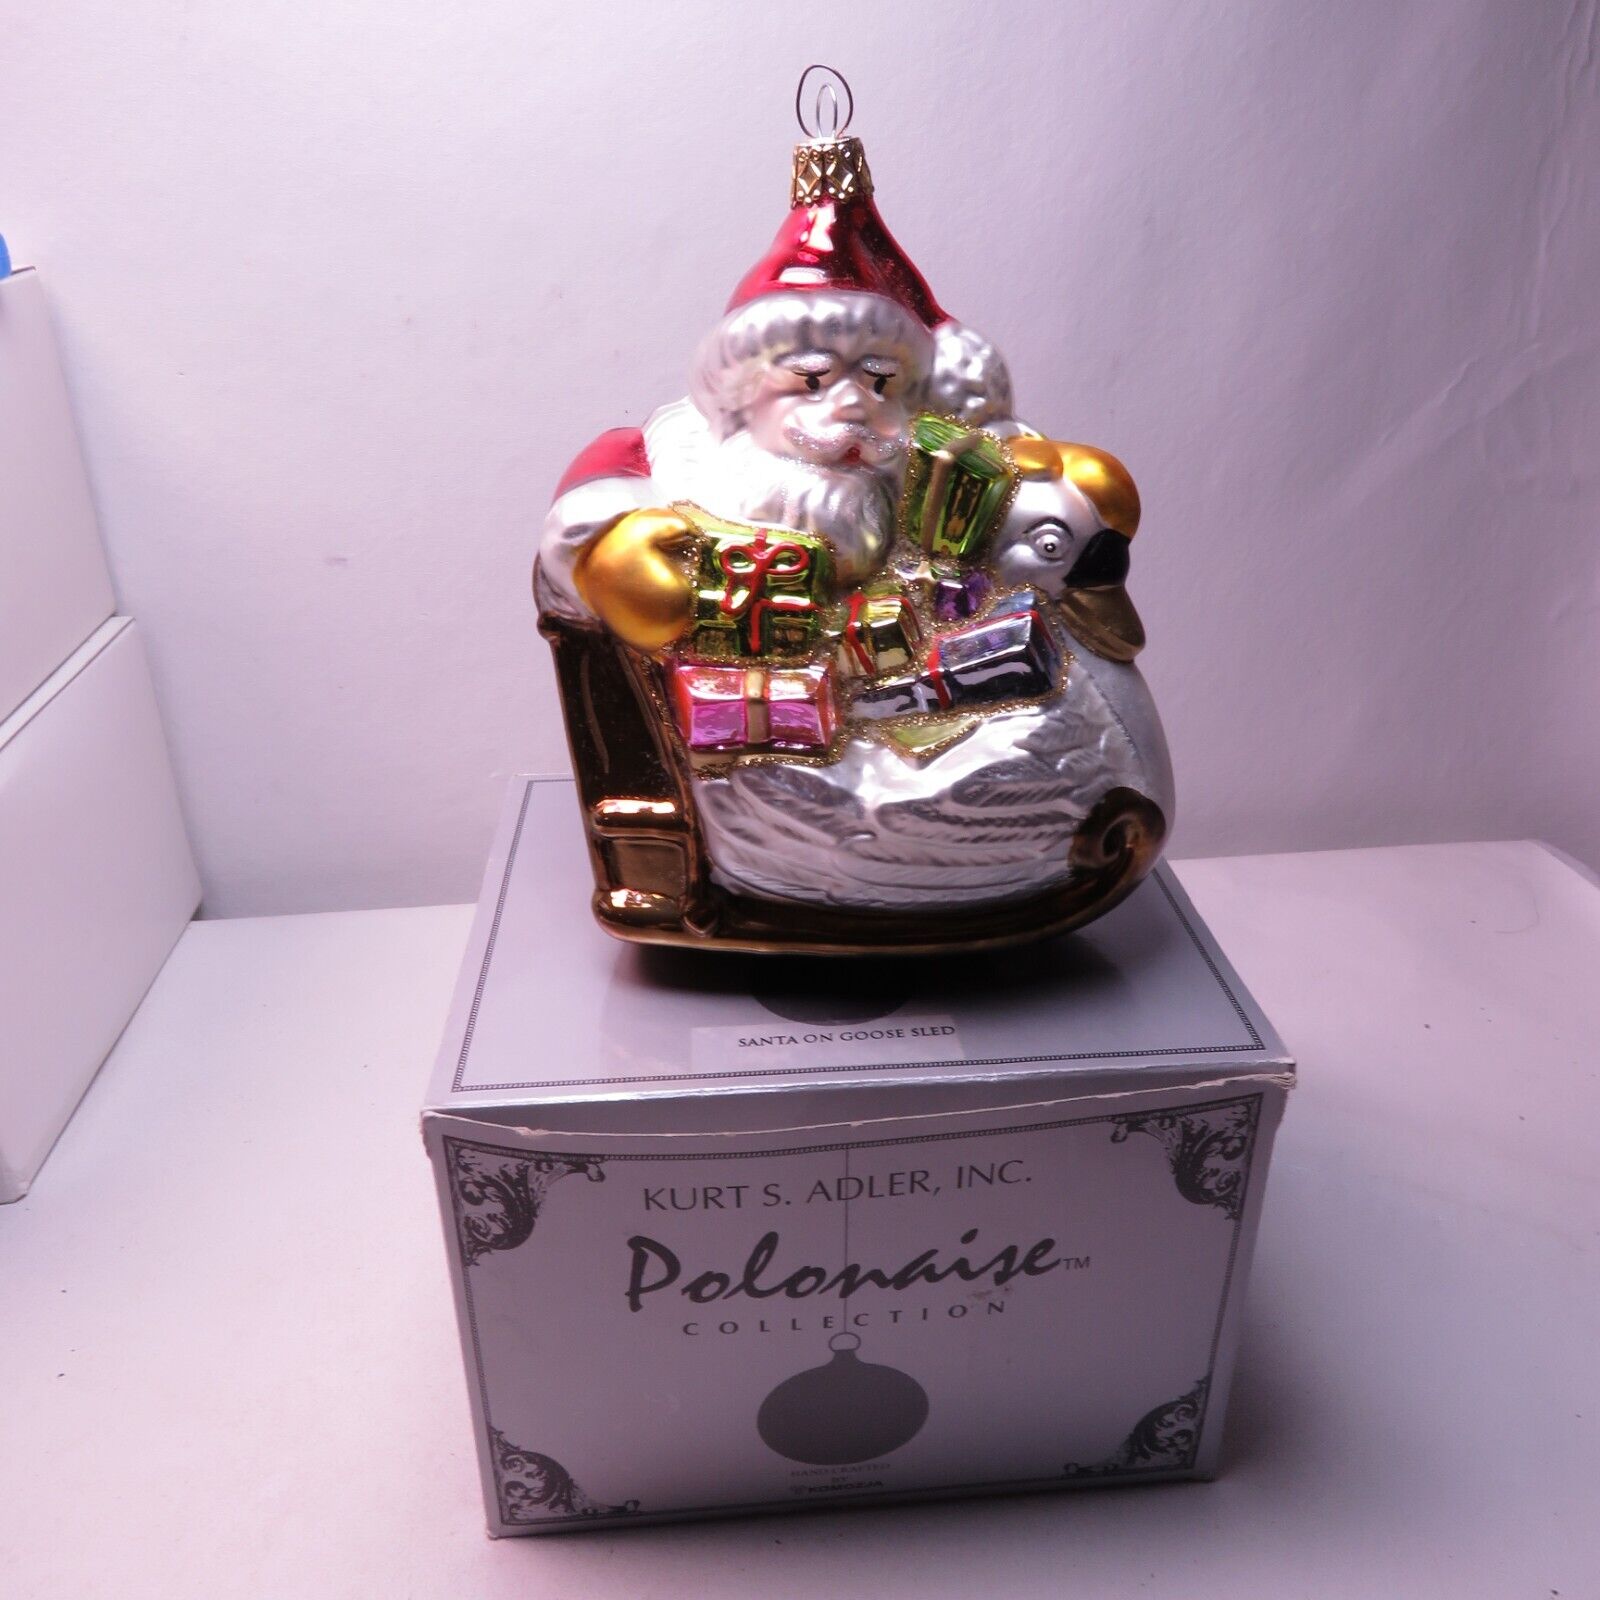 POLONAISE Kurt S. Adler by KOMOZJA Santa on Goose Sled Christmas Ornament w/ Box